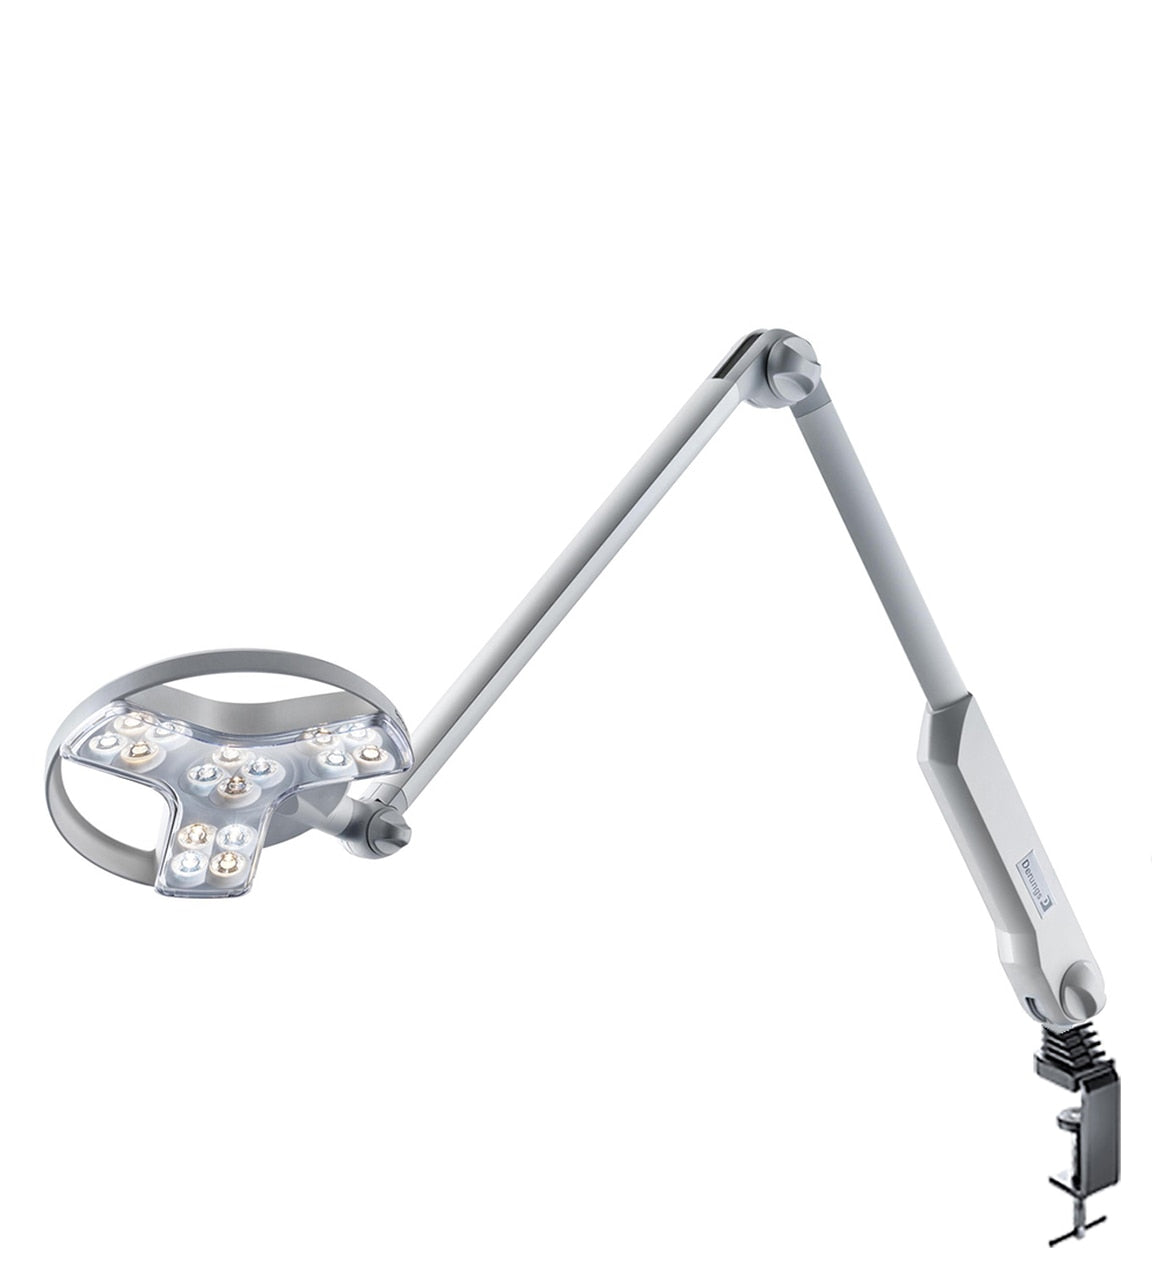 Waldmann D15461100, VISIANO 20-2 P TX LED Examination Light, Medical Grade, Articulating Arm, 4500K/3500K, Table Clamp